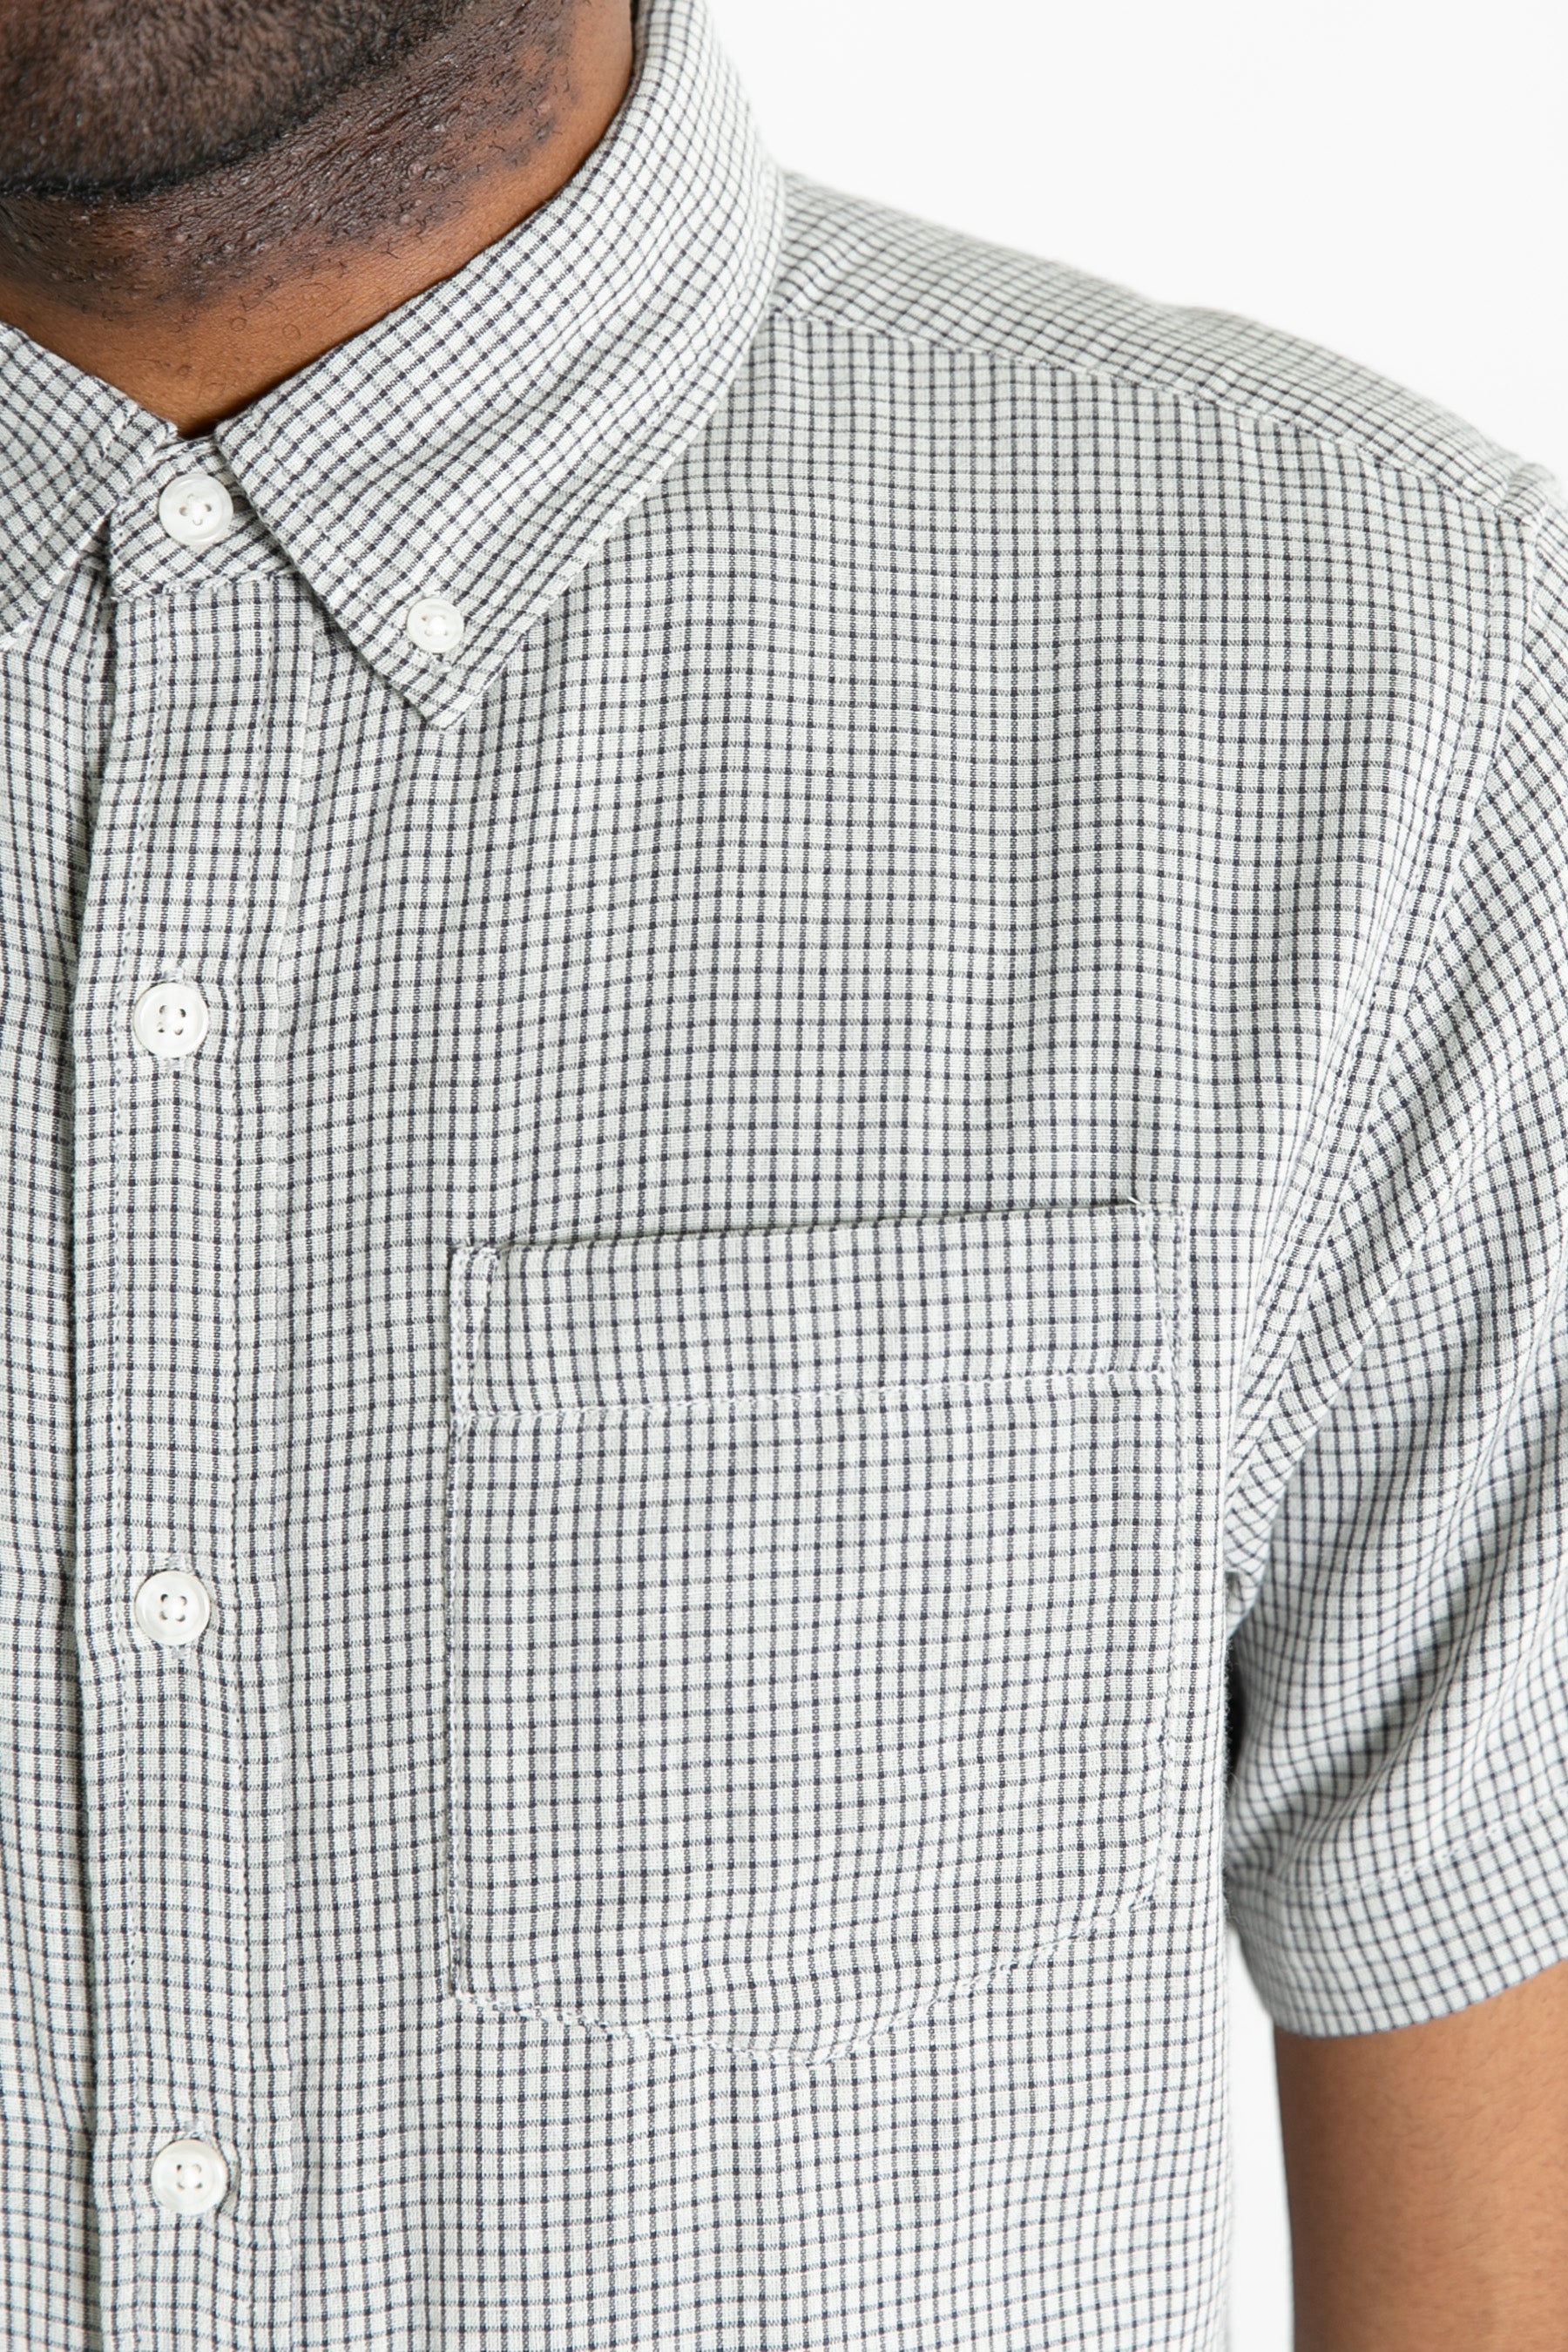 Jordan Slim Shirt / Ivory Grid Doublecloth